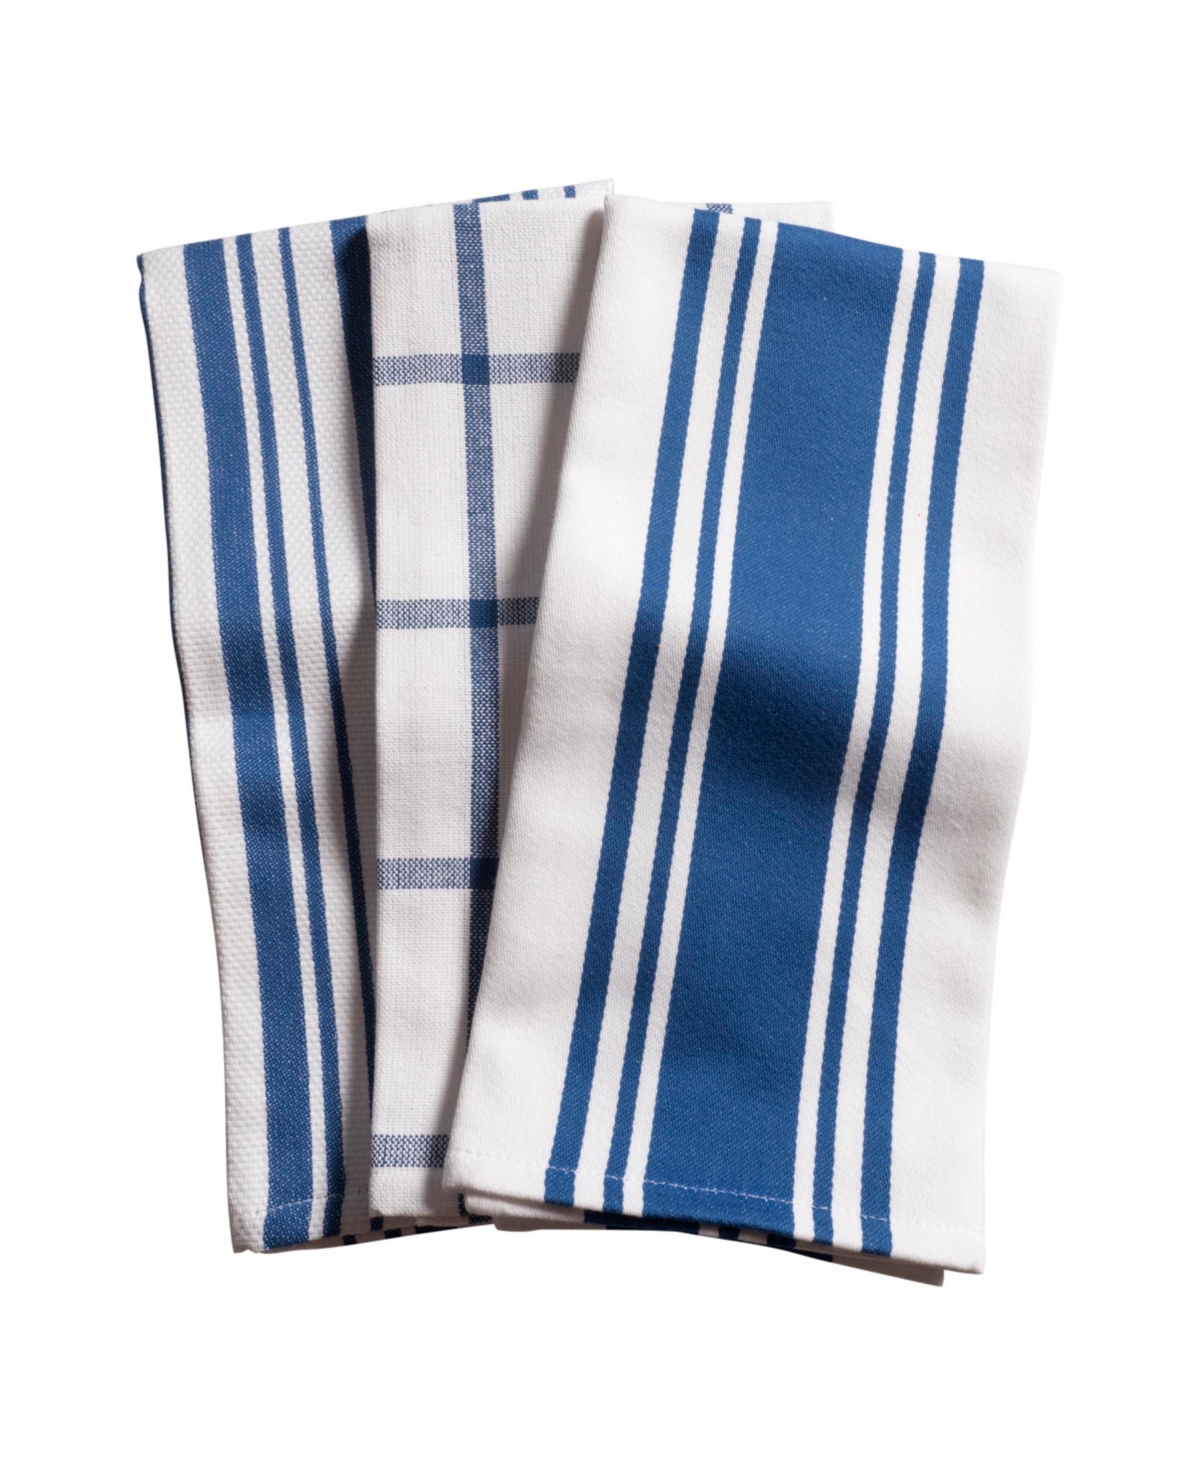 Pantry Cotton 3 Piece Kitchen Towel, 20" x 30" - Blue